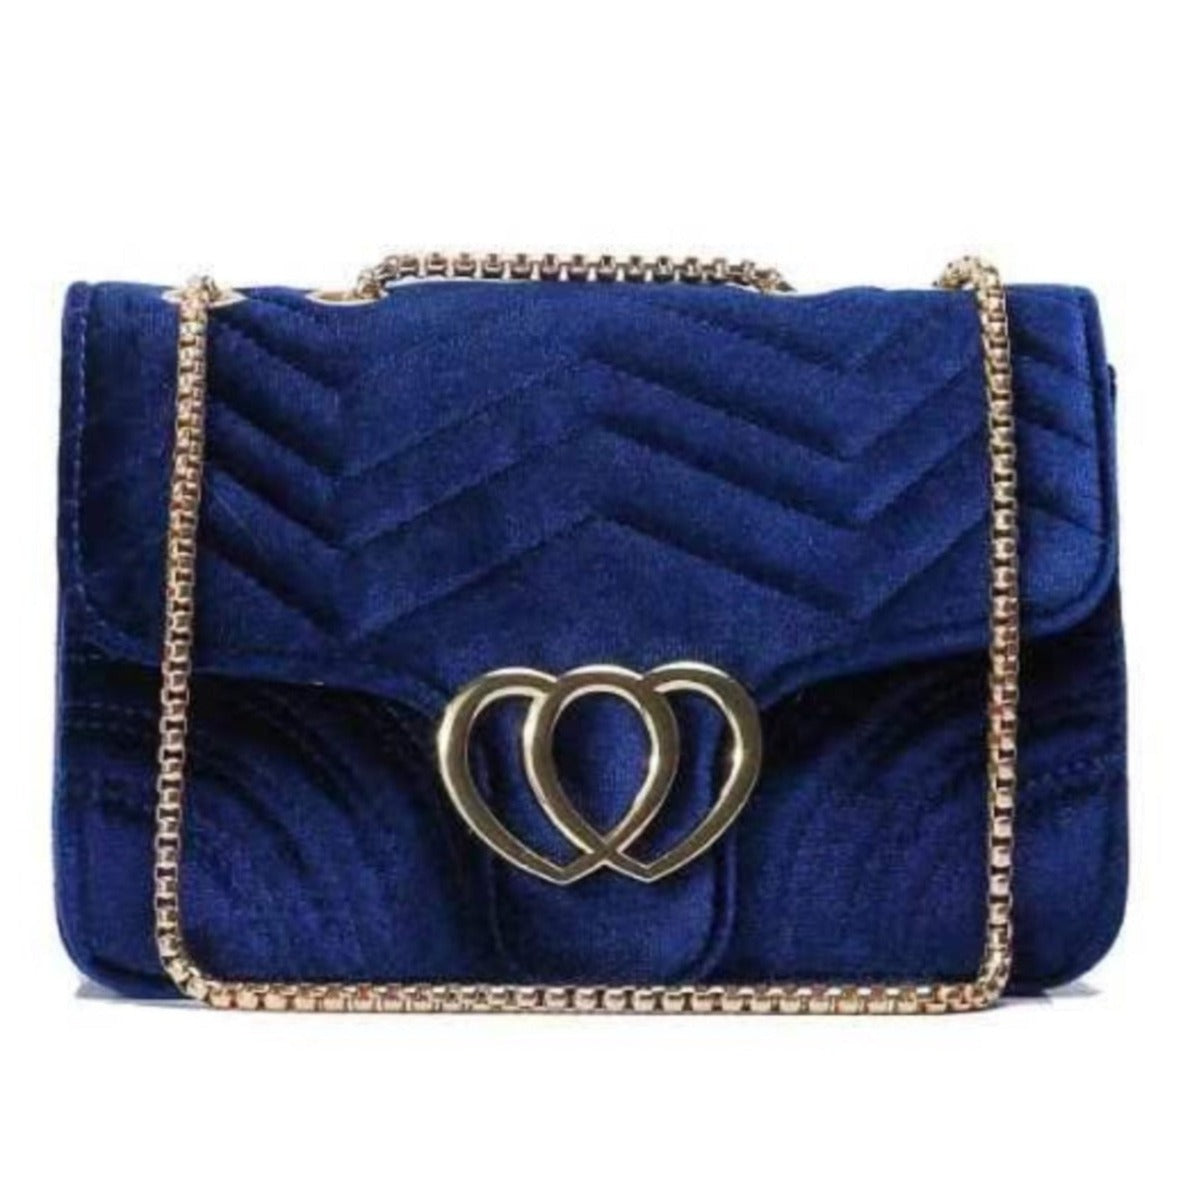 Luxury Velvet Heart Shoulder/Clutch Bag